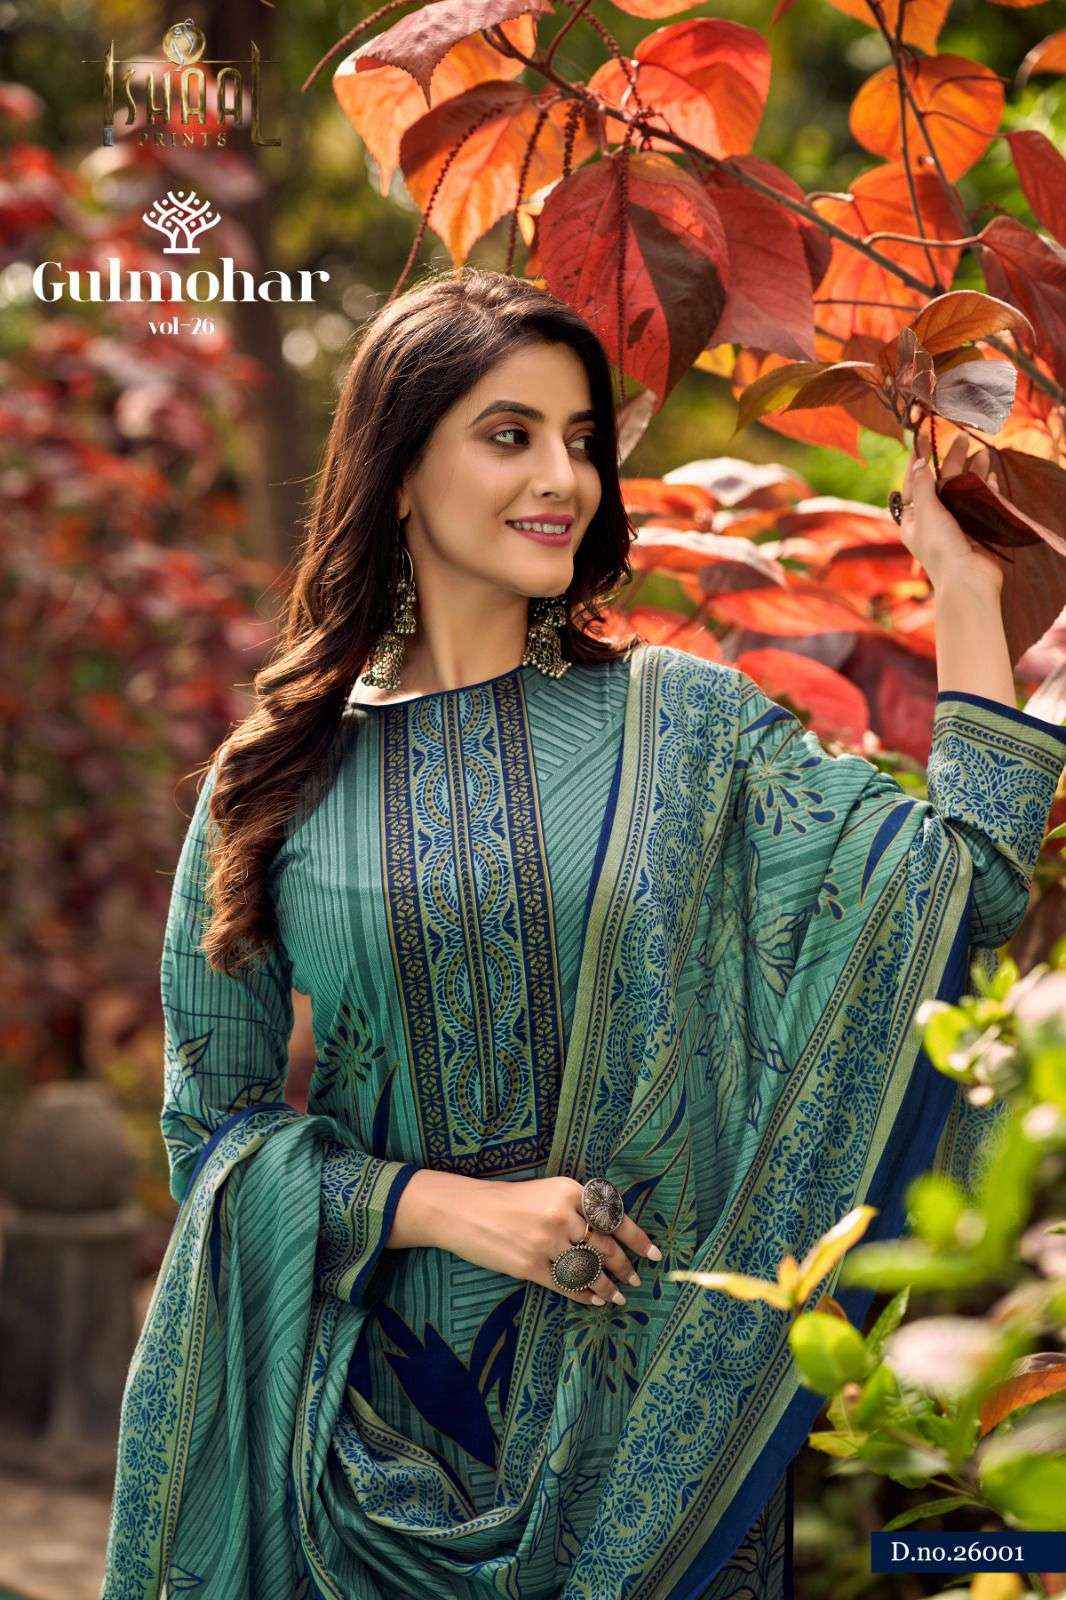 Ishaal Prints Gulmohar Vol 26 Lawn Cotton Dress Material 10 pcs Catalogue